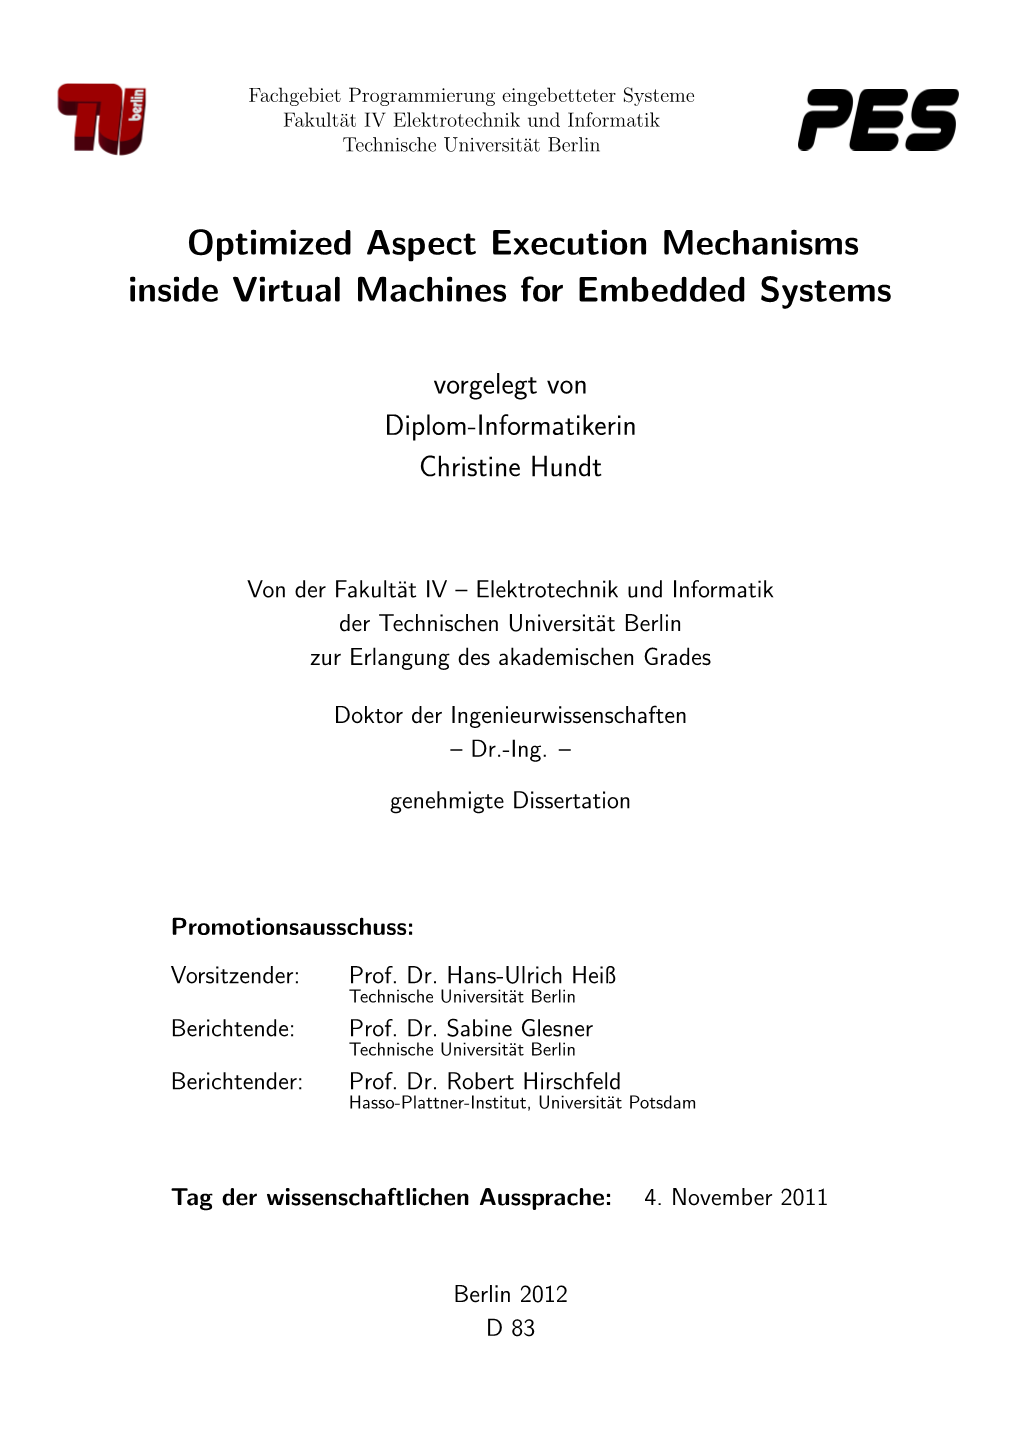 Optimized Aspect Execution Mechanisms Inside the Virtual